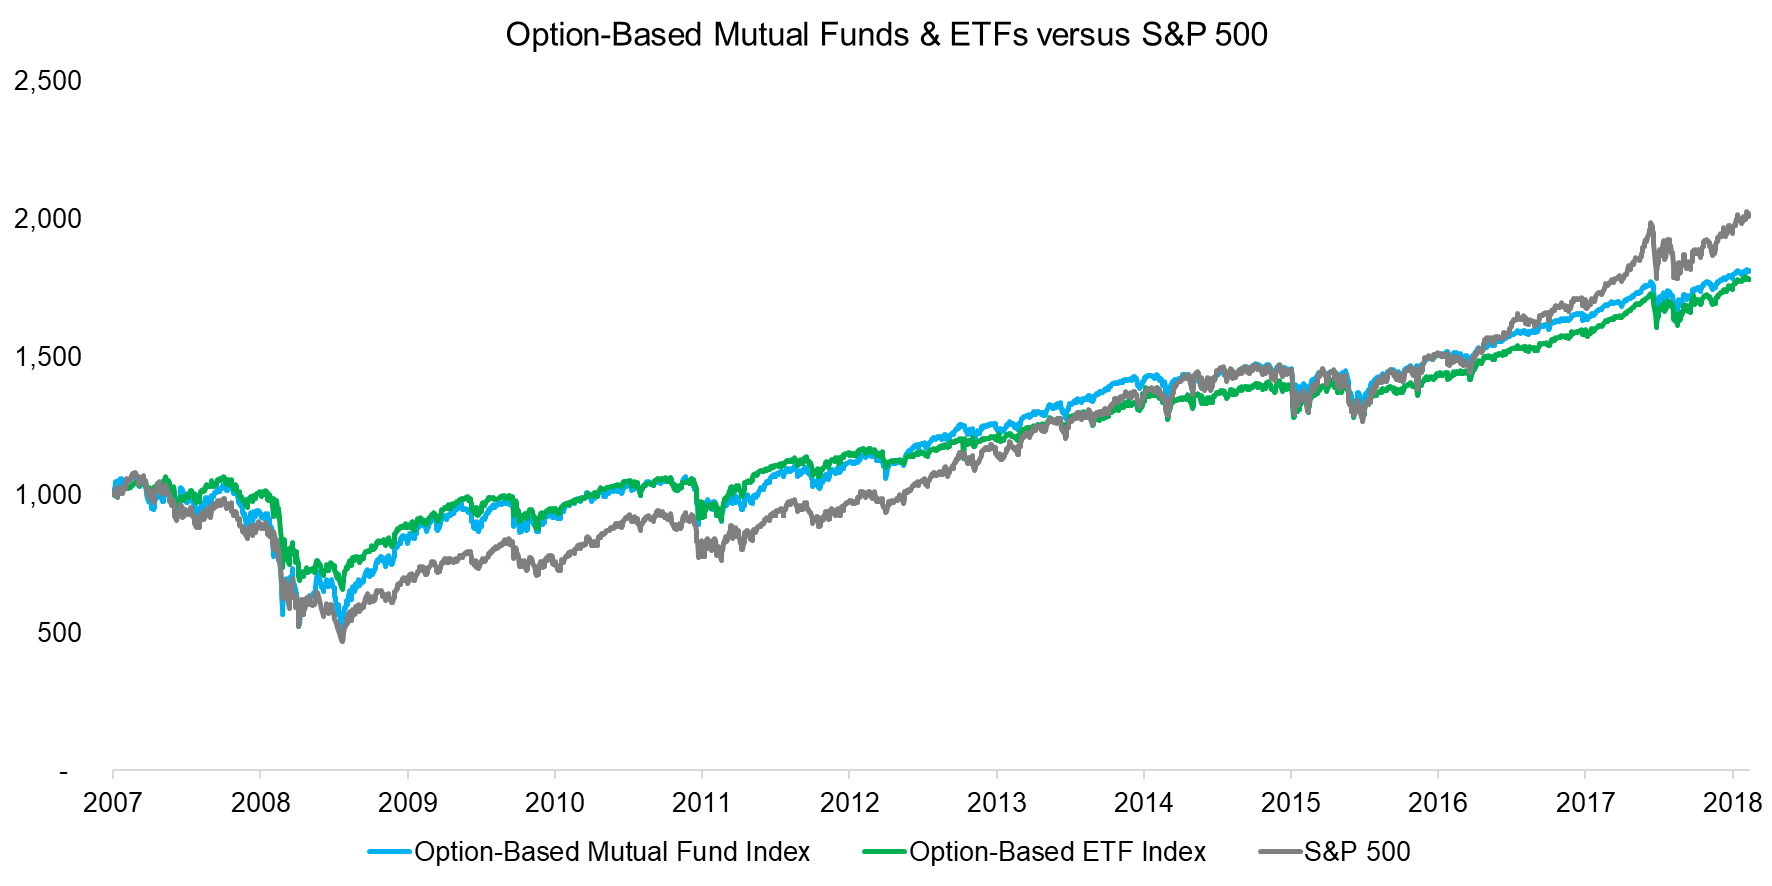 Option-Based Mutual Funds & ETFs versus S&P 500